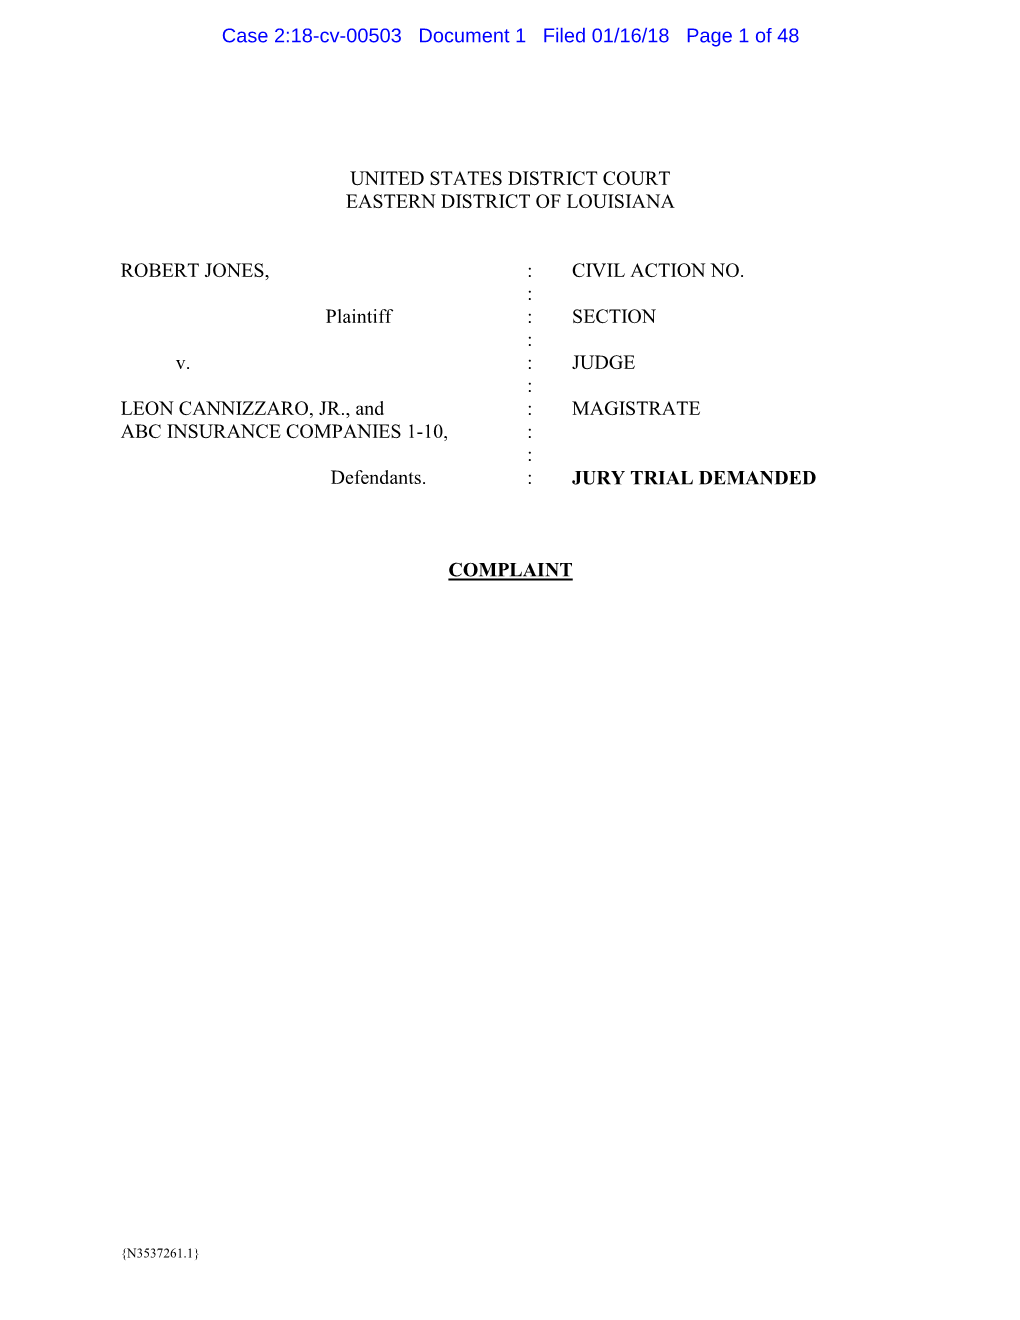 UNITED STATES DISTRICT COURT EASTERN DISTRICT of LOUISIANA ROBERT JONES, : CIVIL ACTION NO. : Plaintiff : SECTION : V. : JUDGE